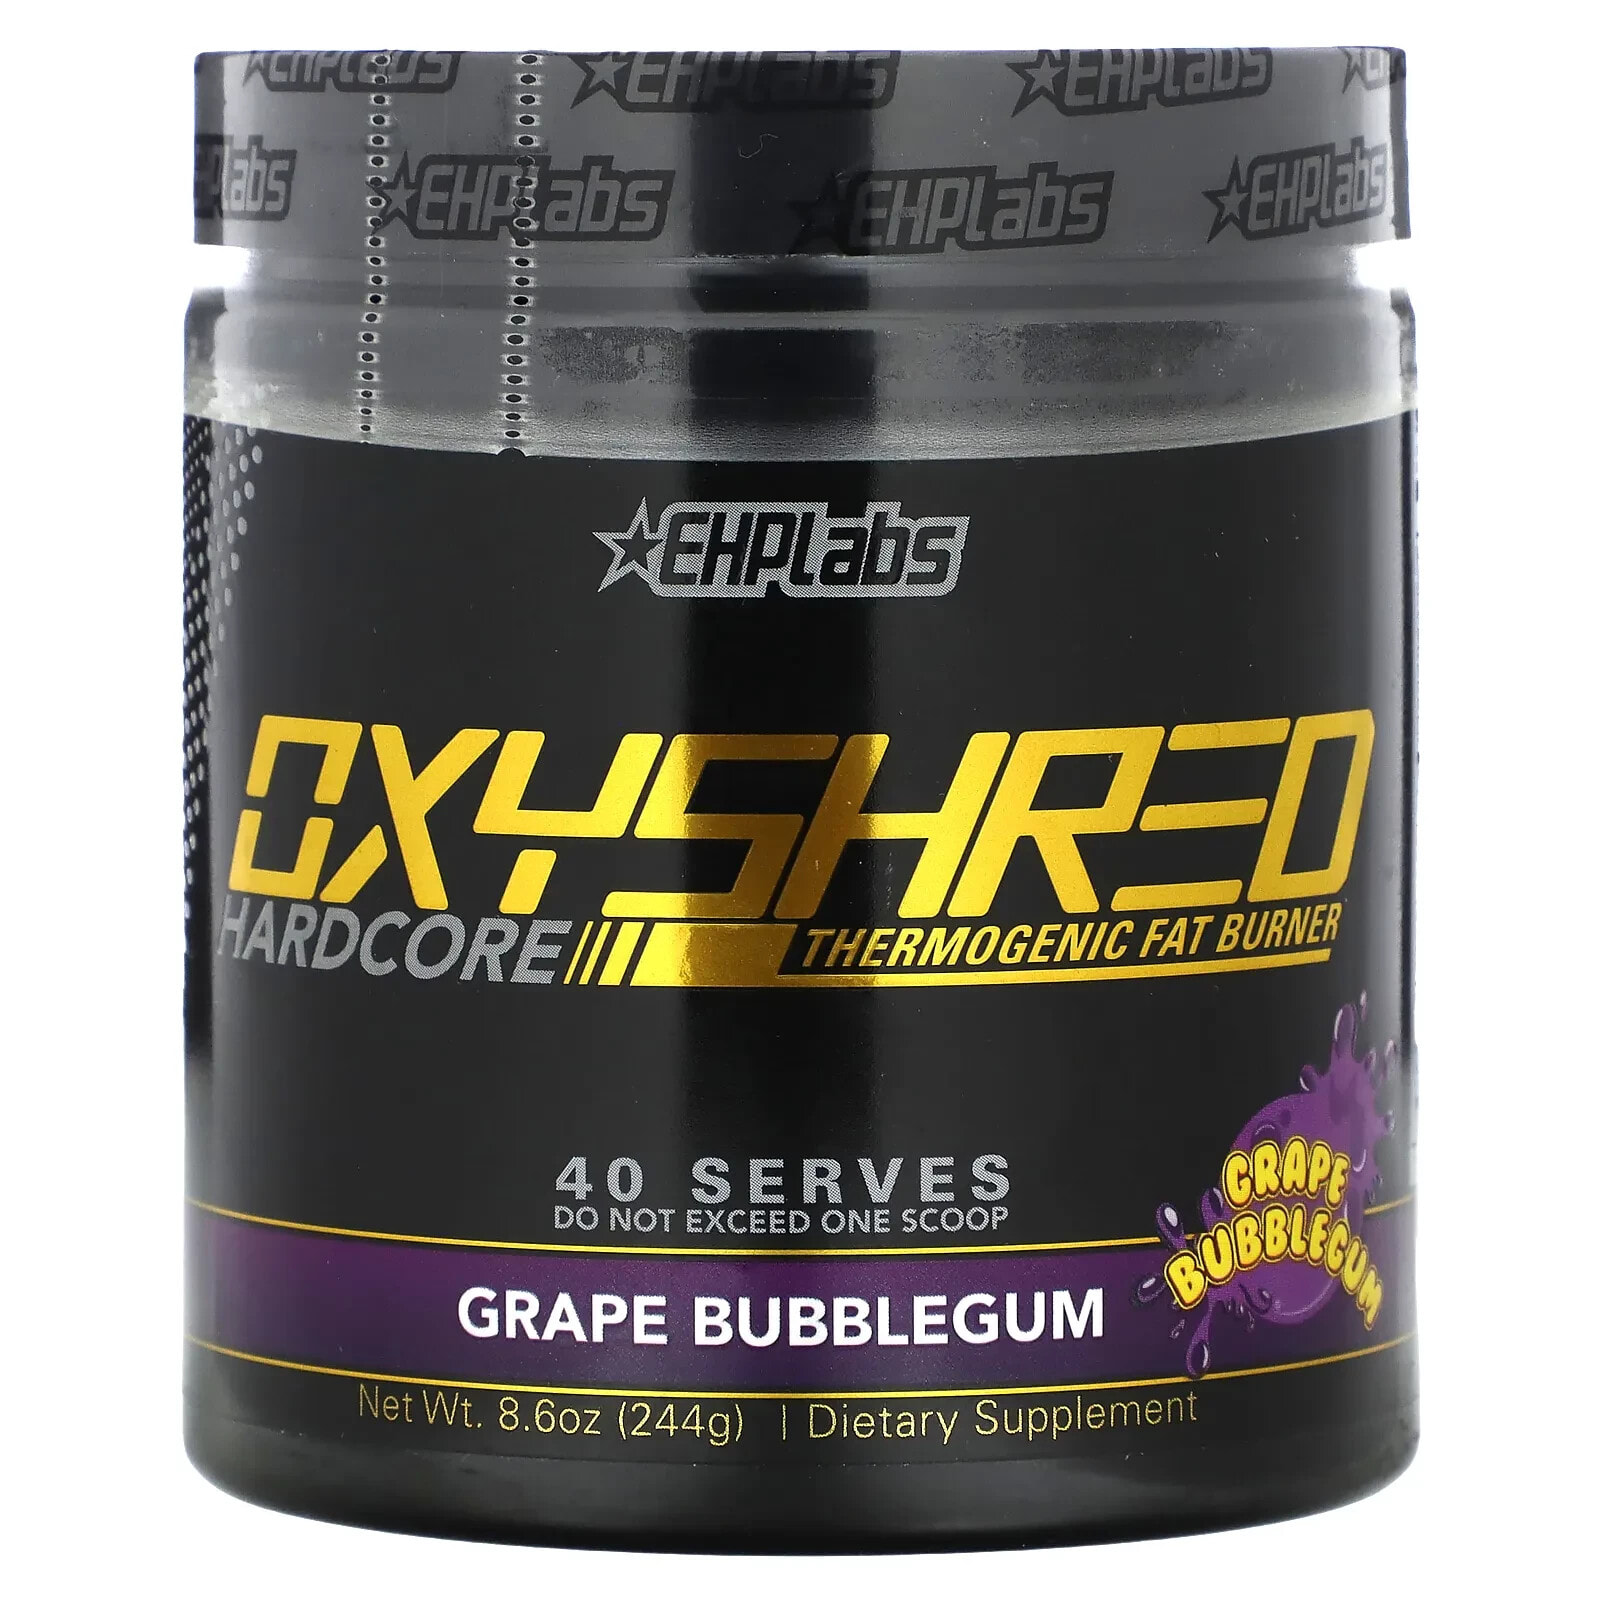 Oxyshred, Hardcore Thermogenic Fat Burner, Grape Bubblegum, 8.6 oz (244 g)